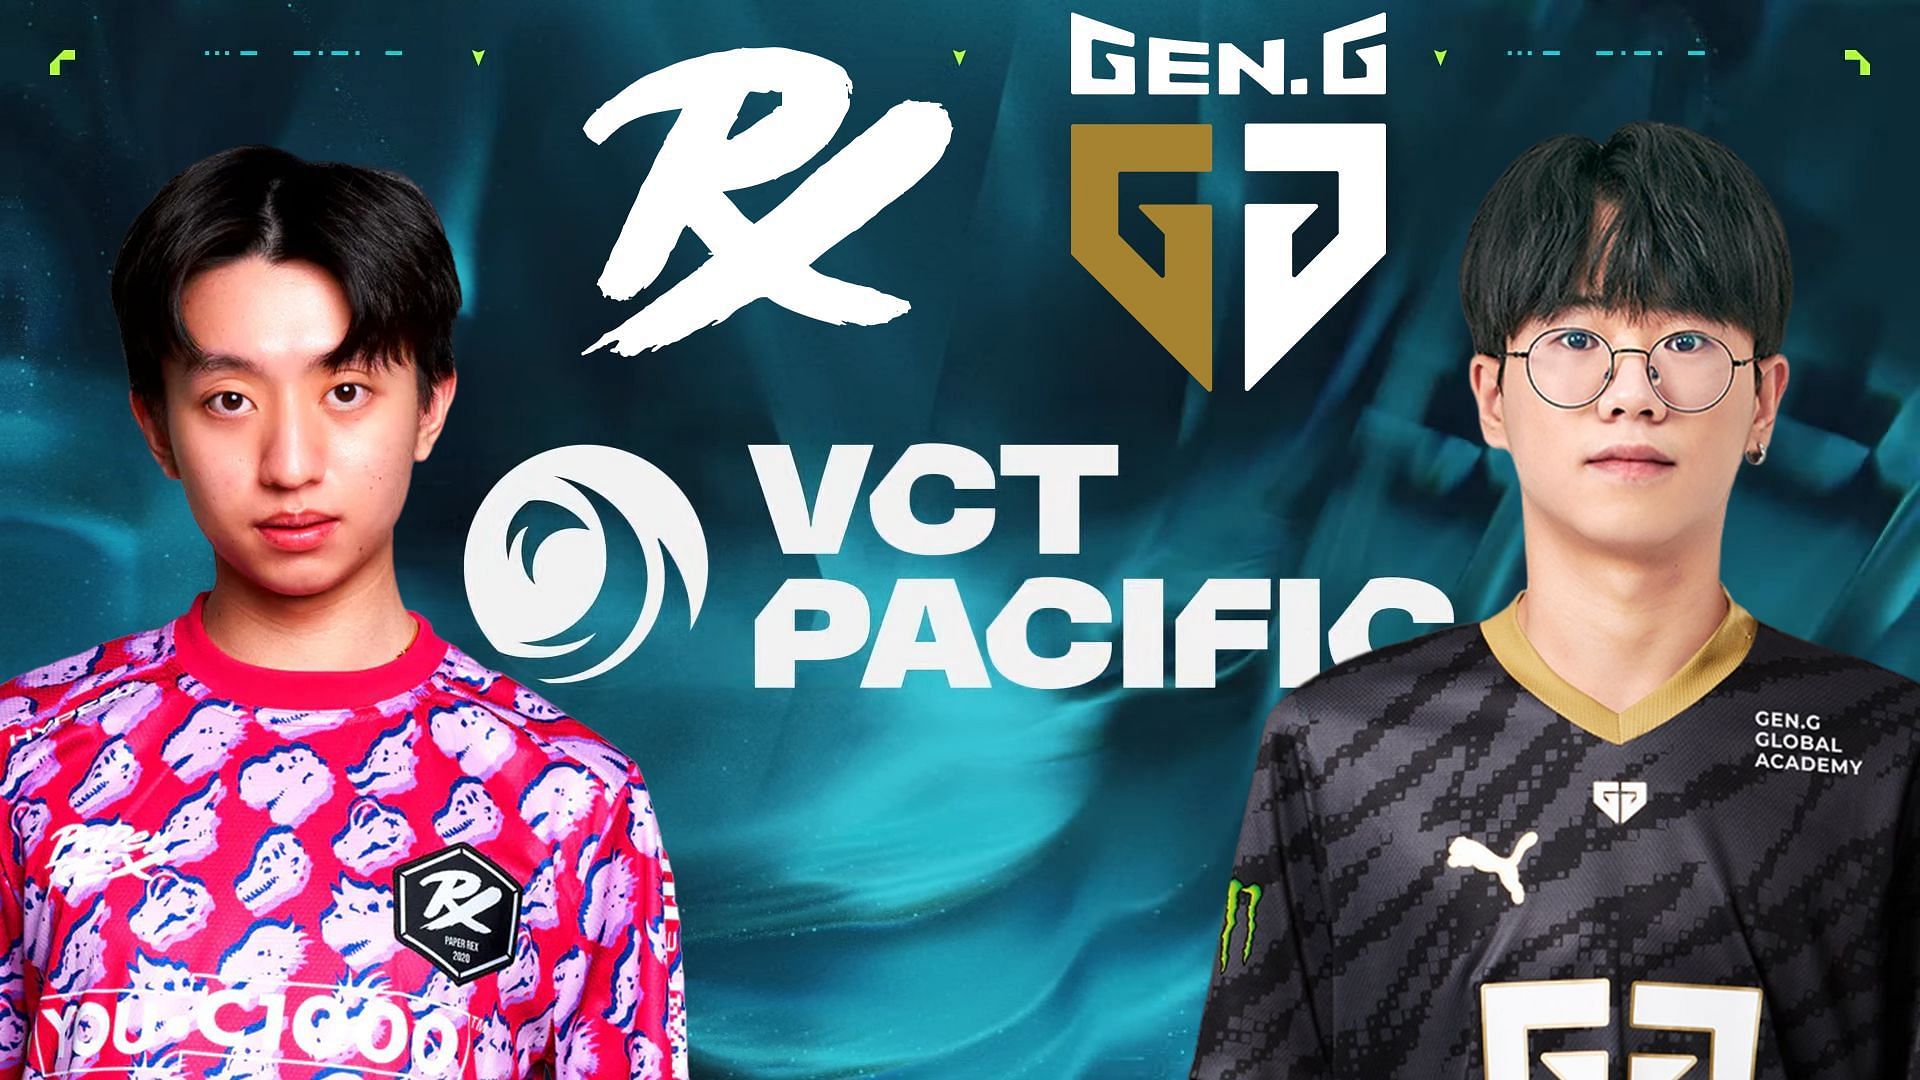 Paper Rex vs Gen.G at VCT Pacific Kickoff (Image via Riot Games, Paper Rex and Gen.G))